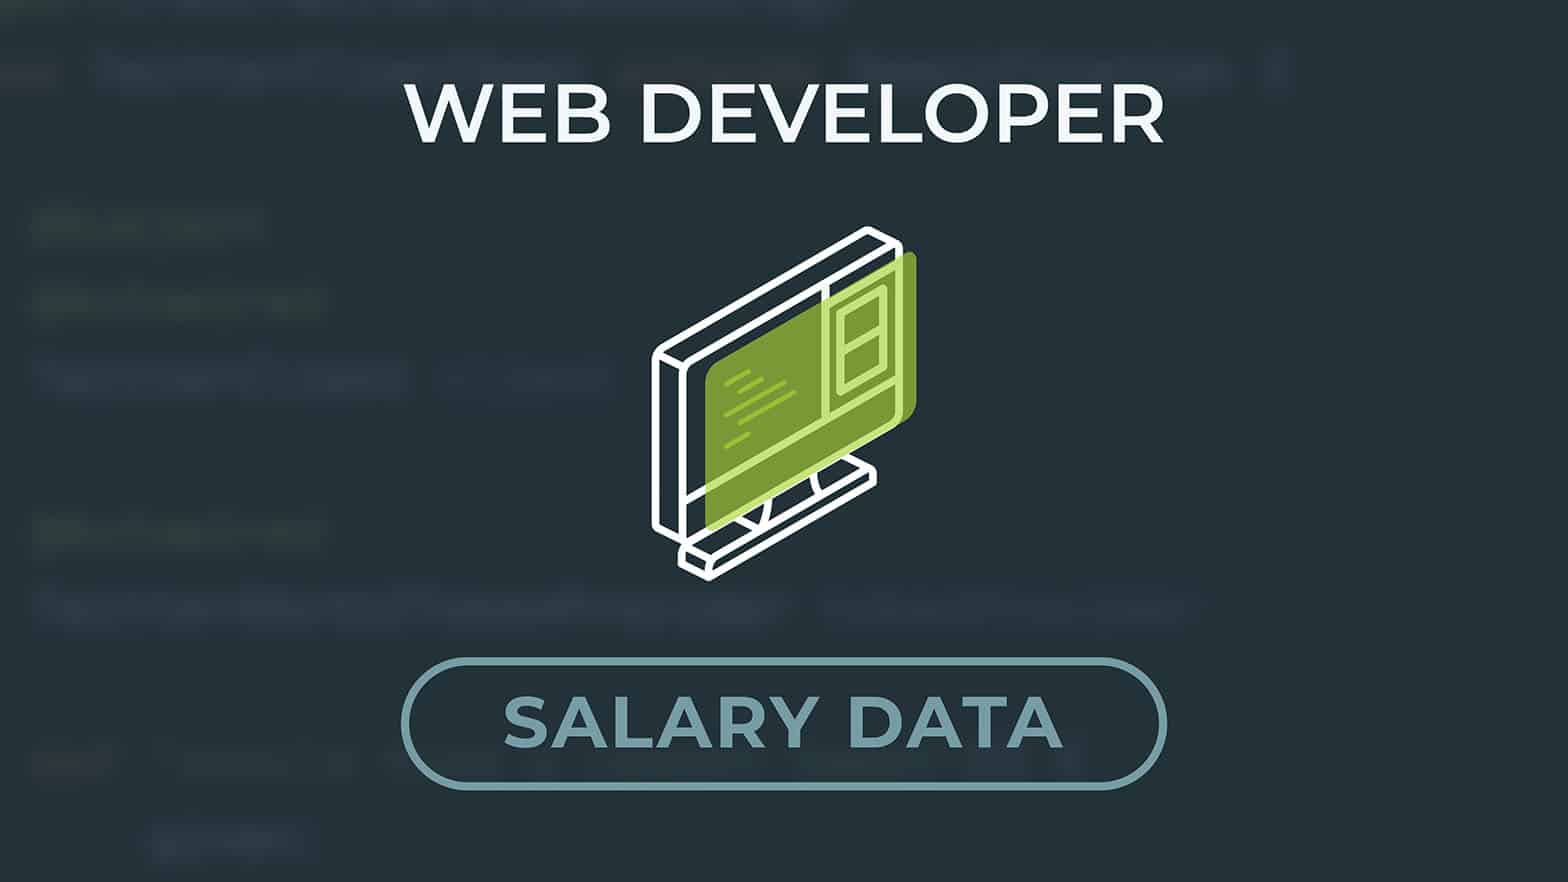 Web developer salary